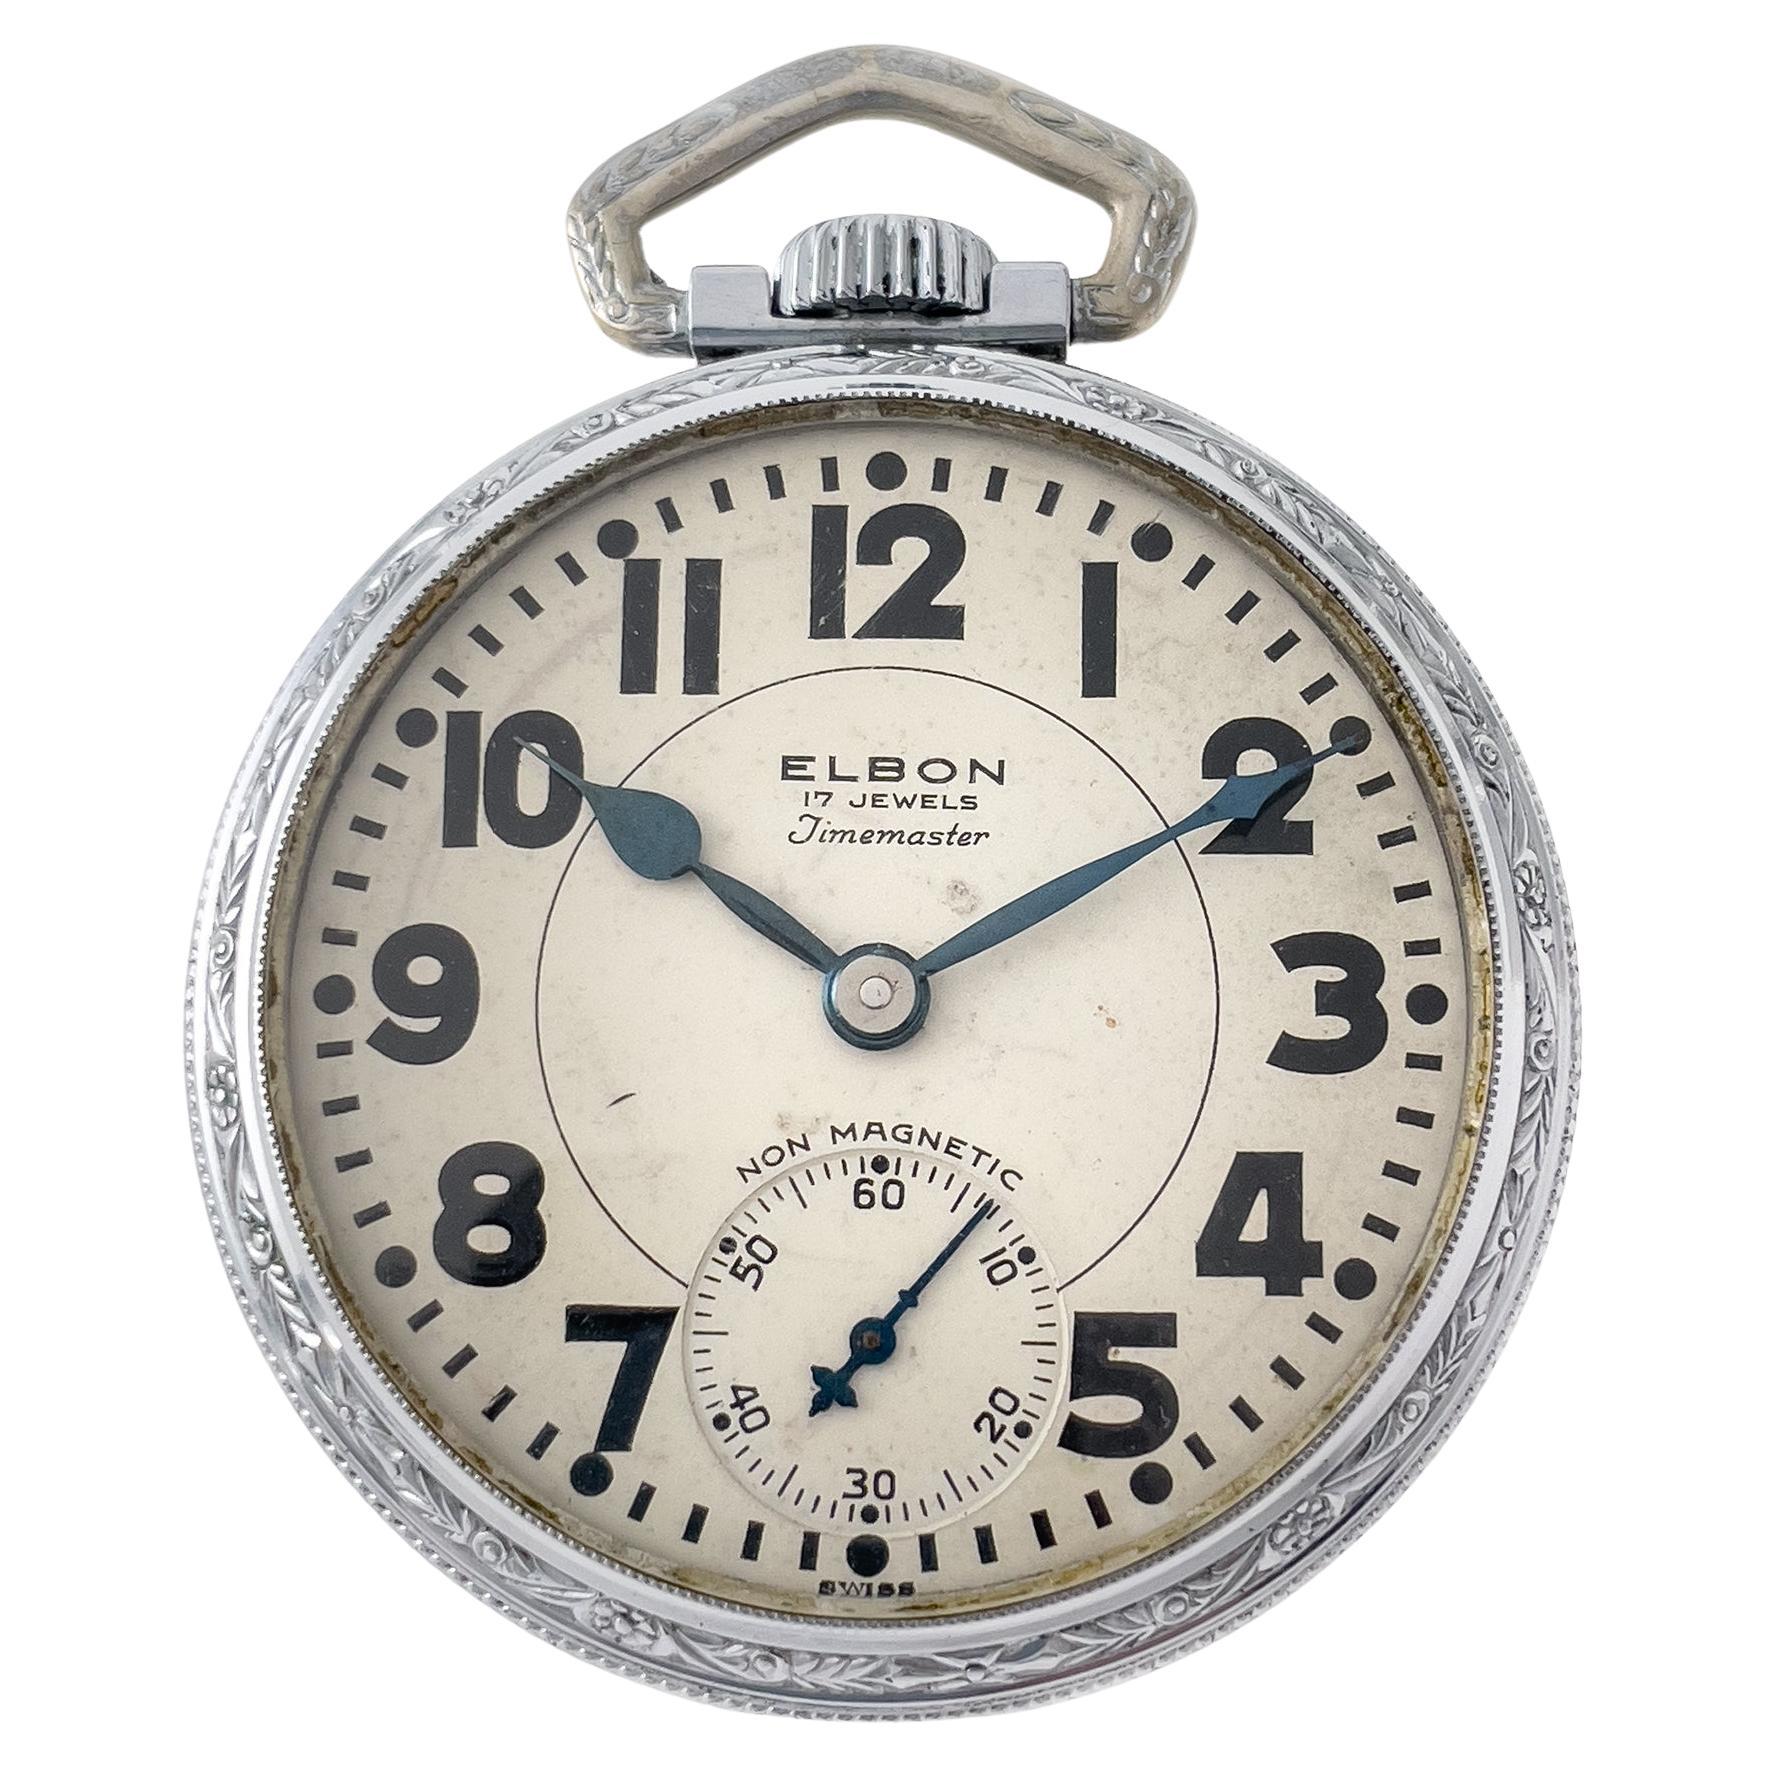 Elbon 17 Jewels Timemaster GMT Pocket Watch For Sale